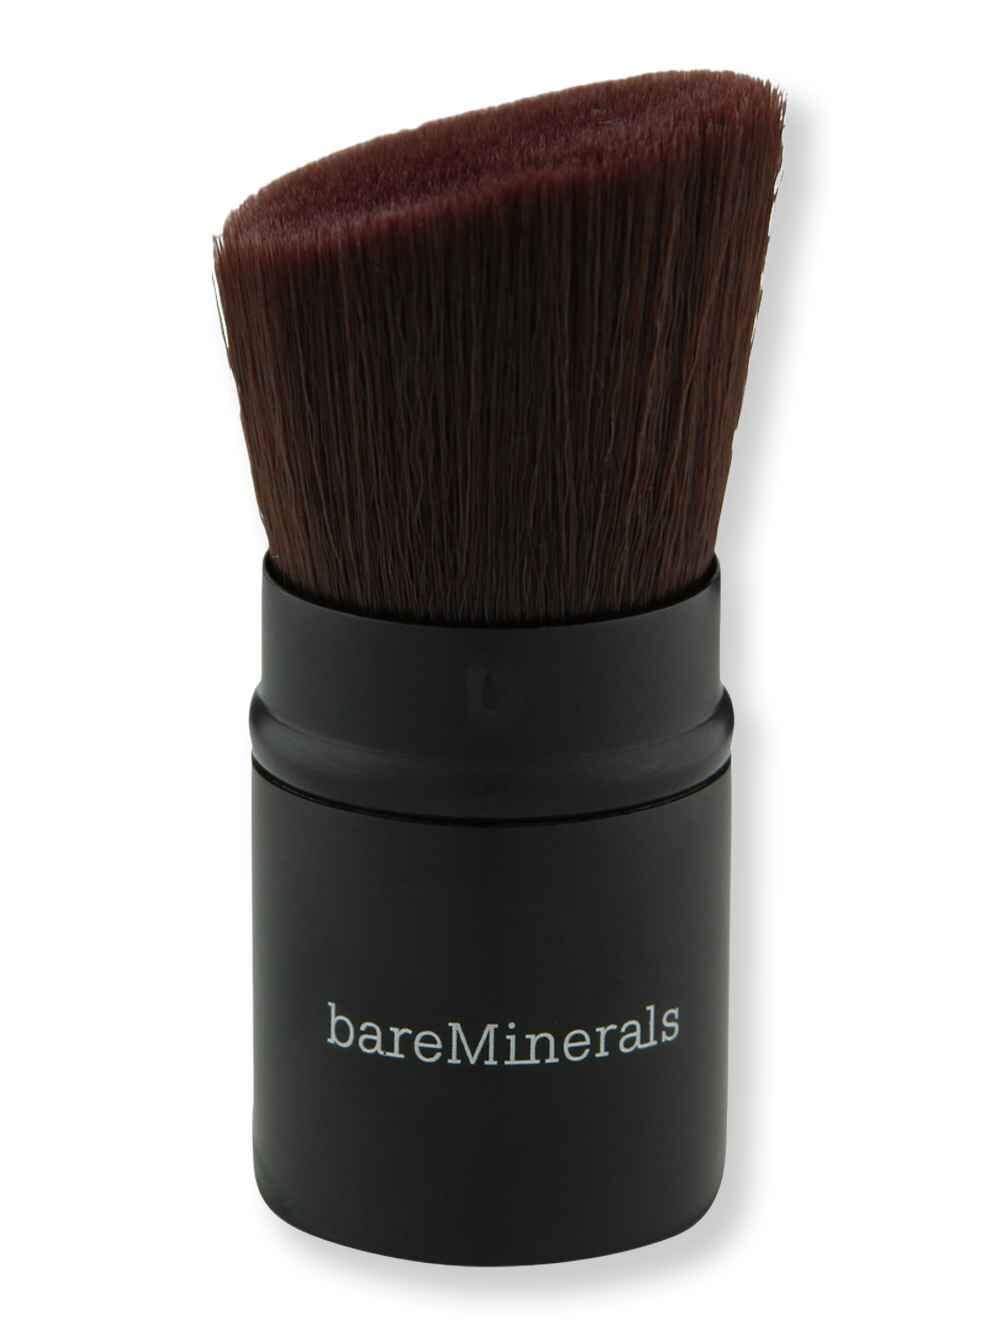 Bareminerals Bareminerals Ready Retractable Precision Brush Makeup Brushes 